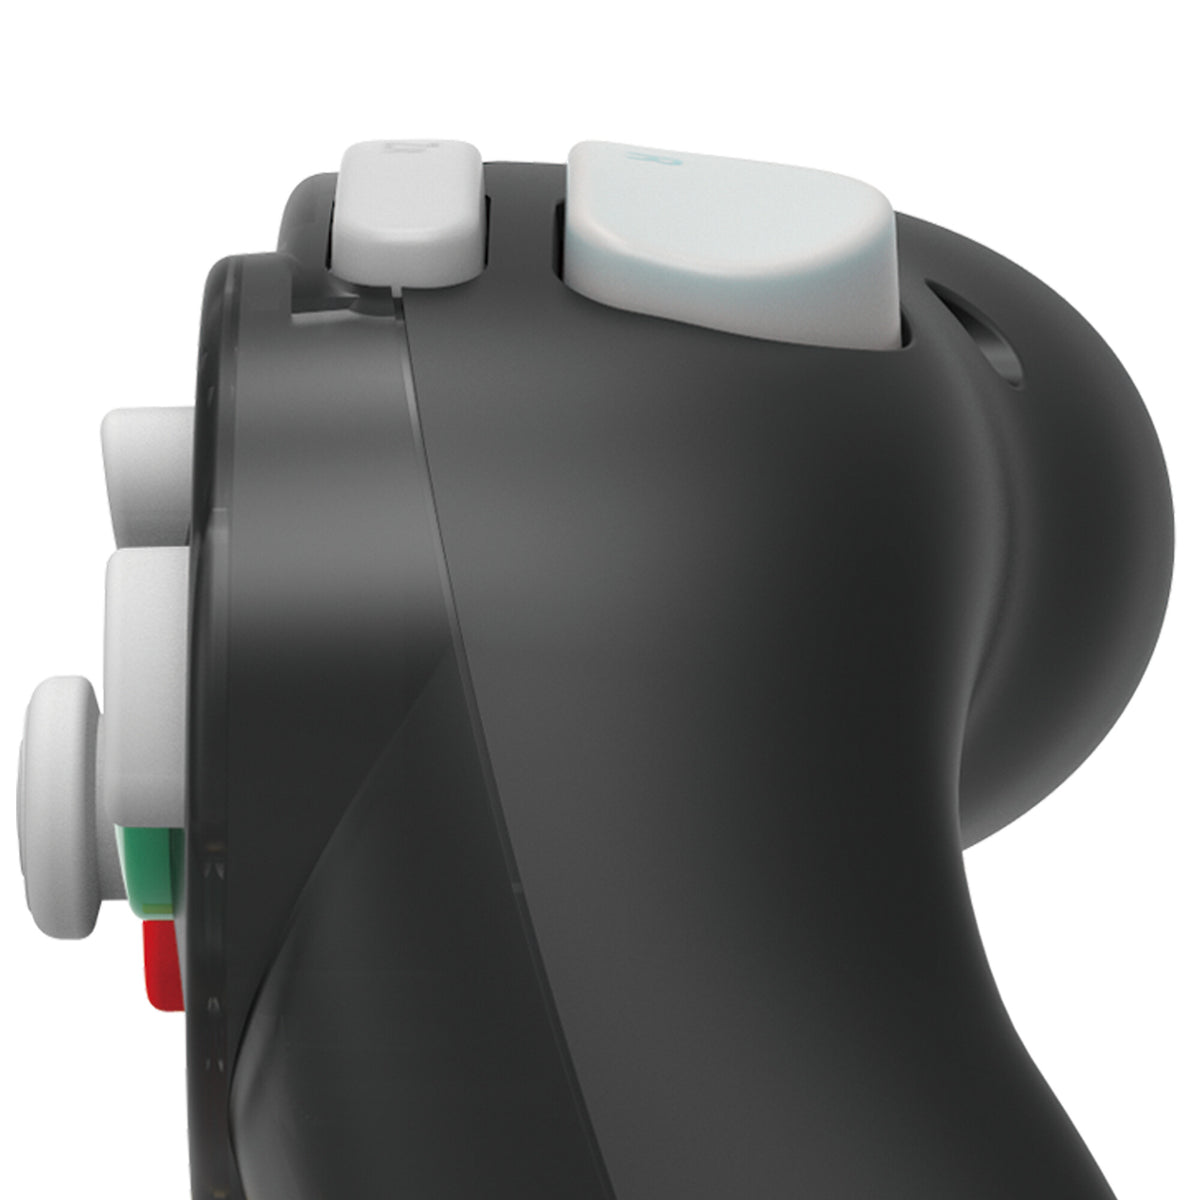 Hori Battle Pad - USB Controller for Nintendo Switch - Zelda